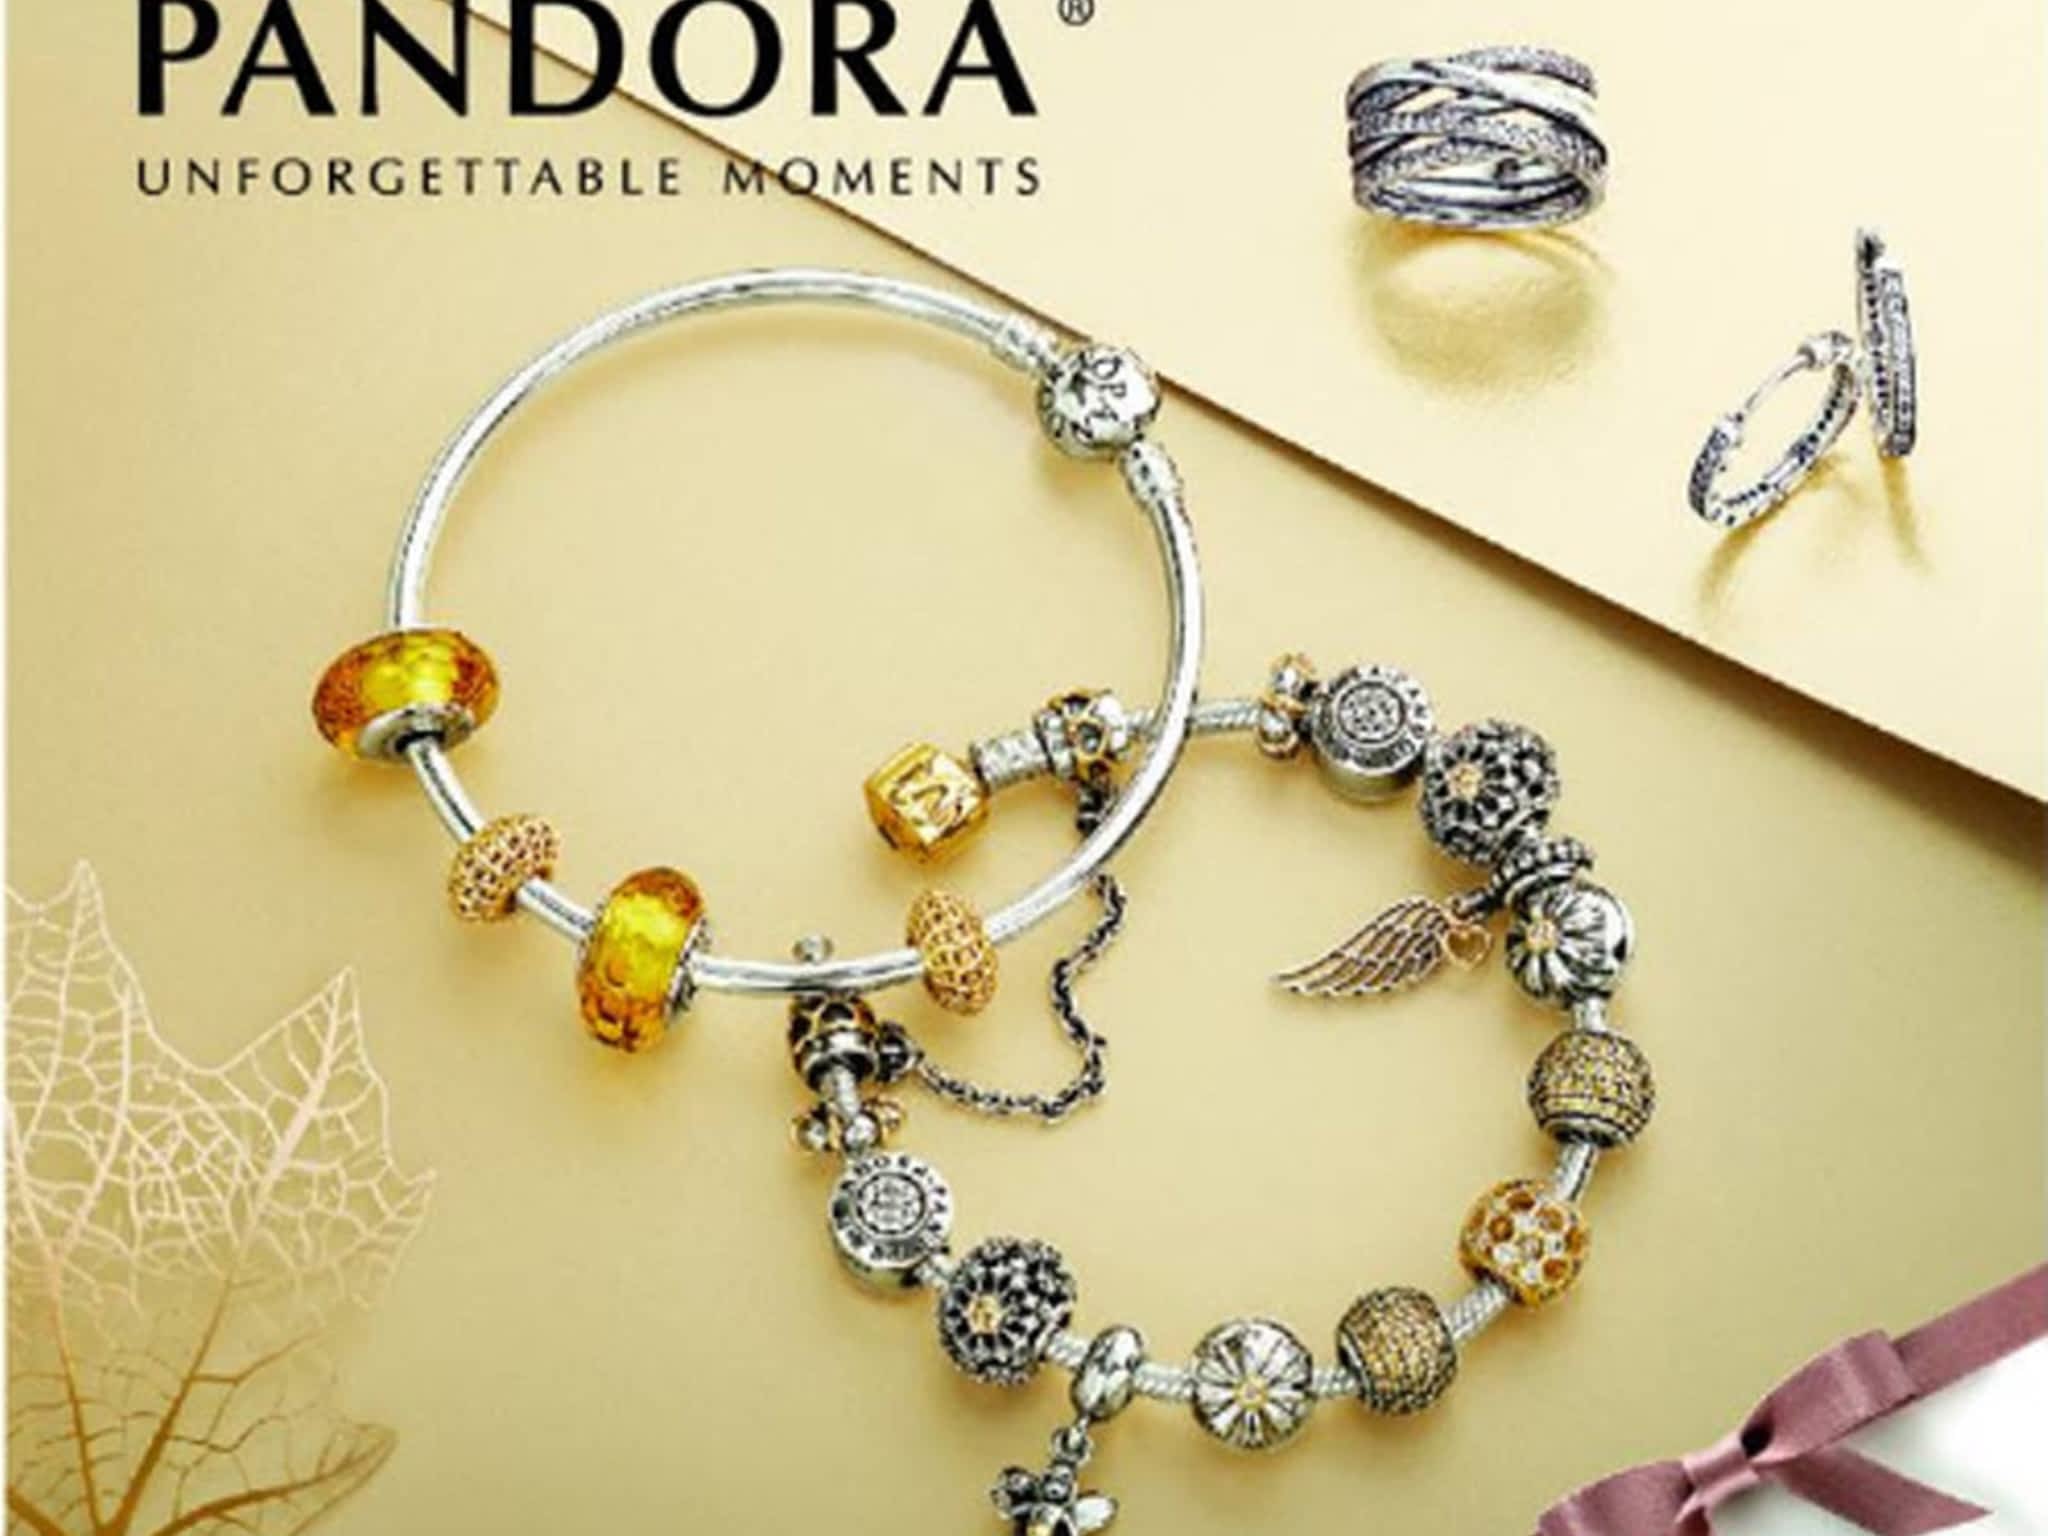 photo Brilliant Gold Jewellers/Pandora